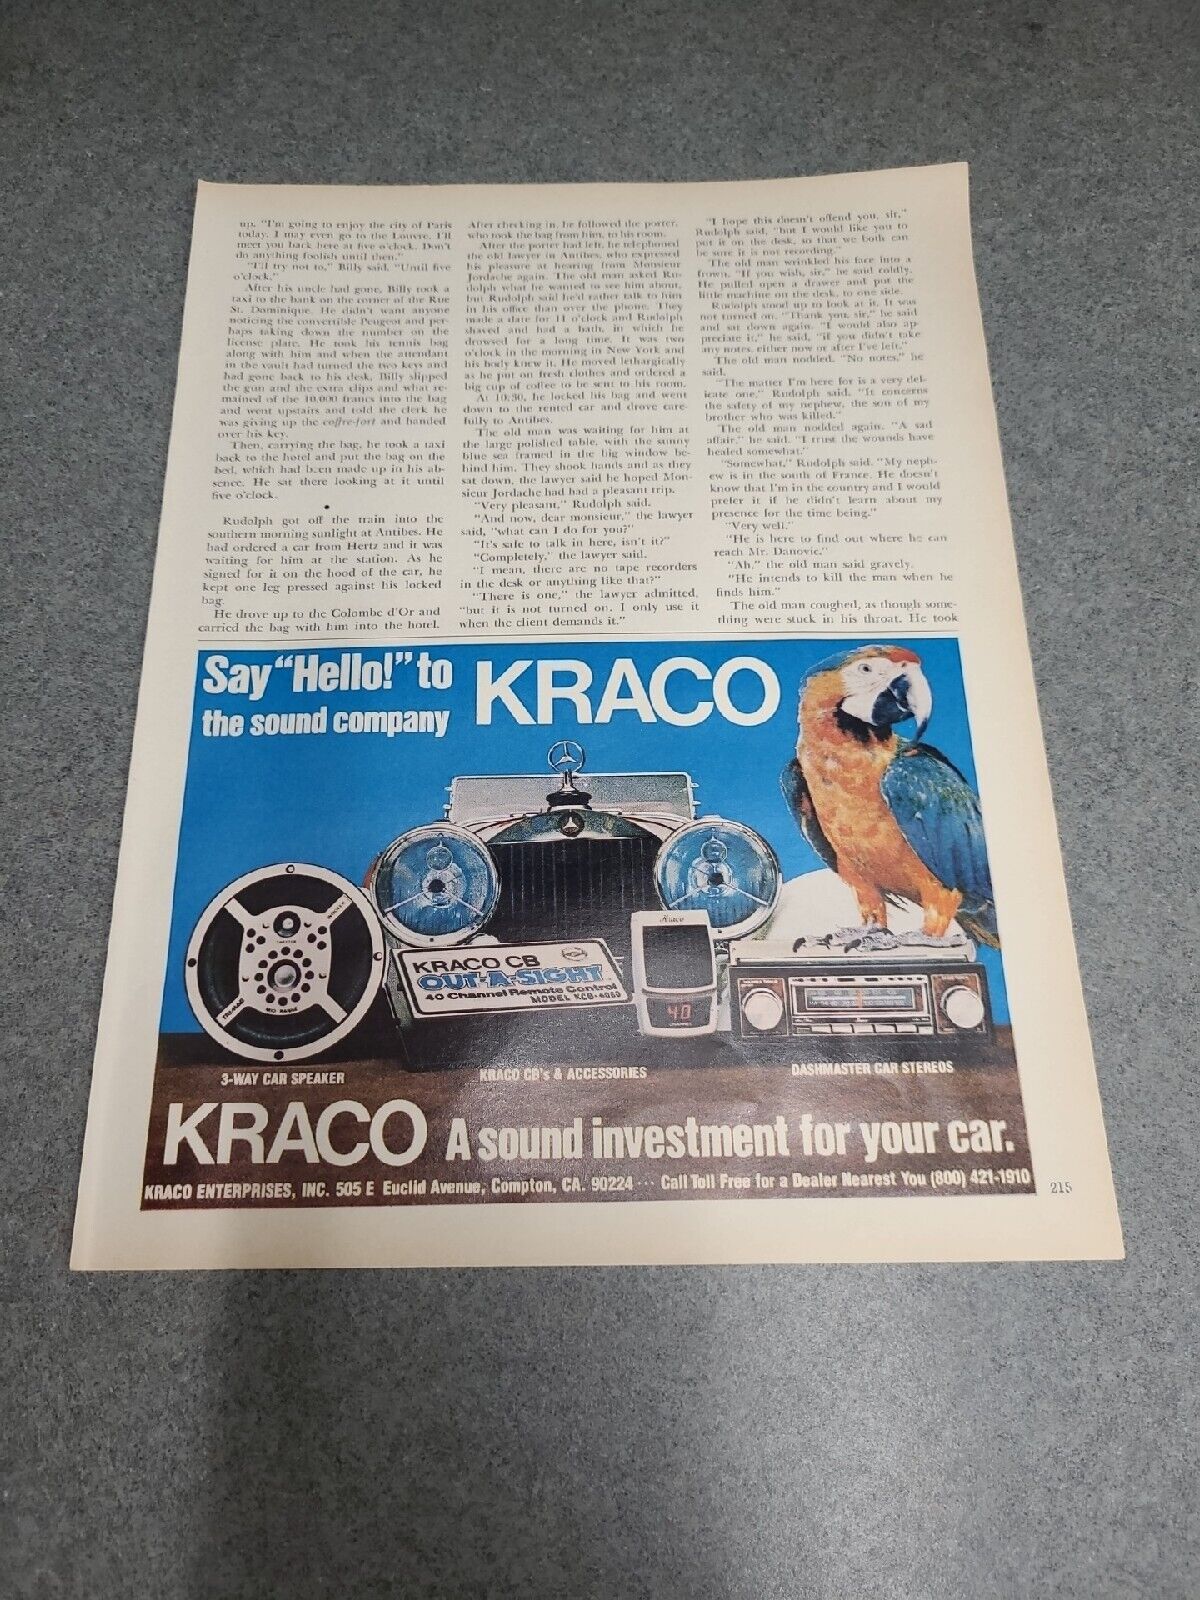 Kraco Sound Company Print Ad 1977 3 way car speaker CB Dashmaster stereos